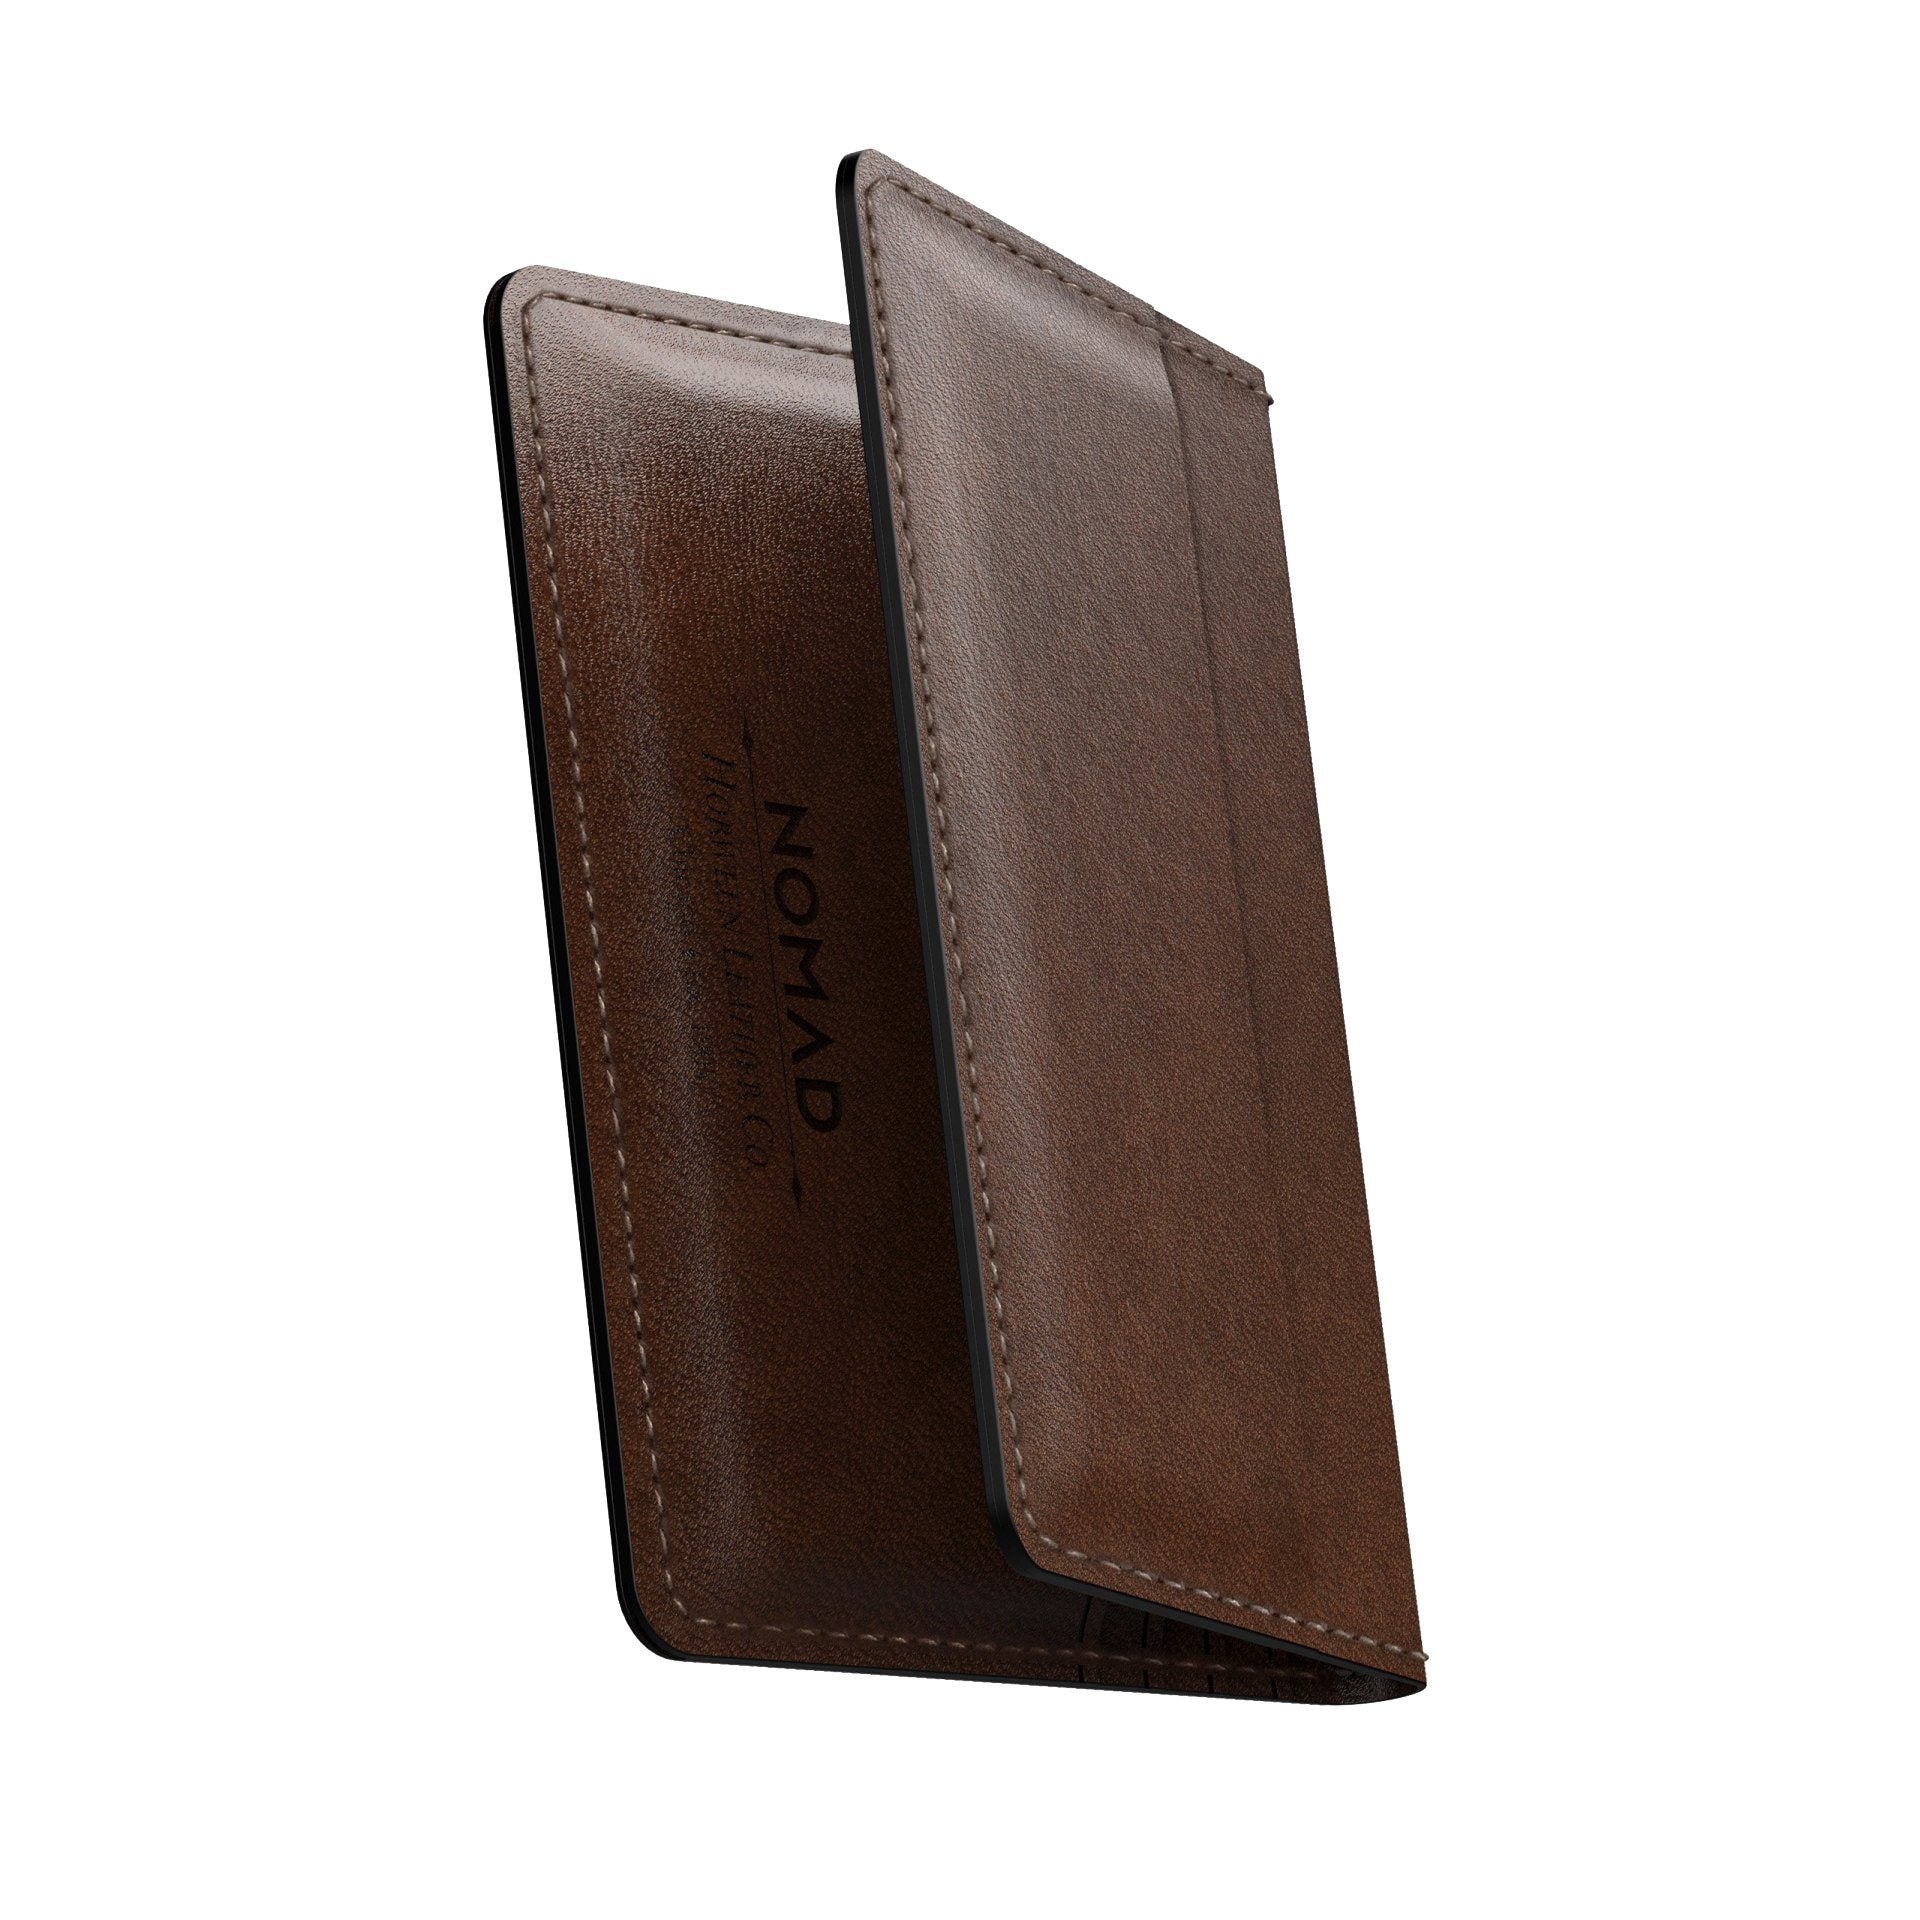 NOMAD Slim Horween Leather Wallet, Rustic Brown Wallet NOMAD 